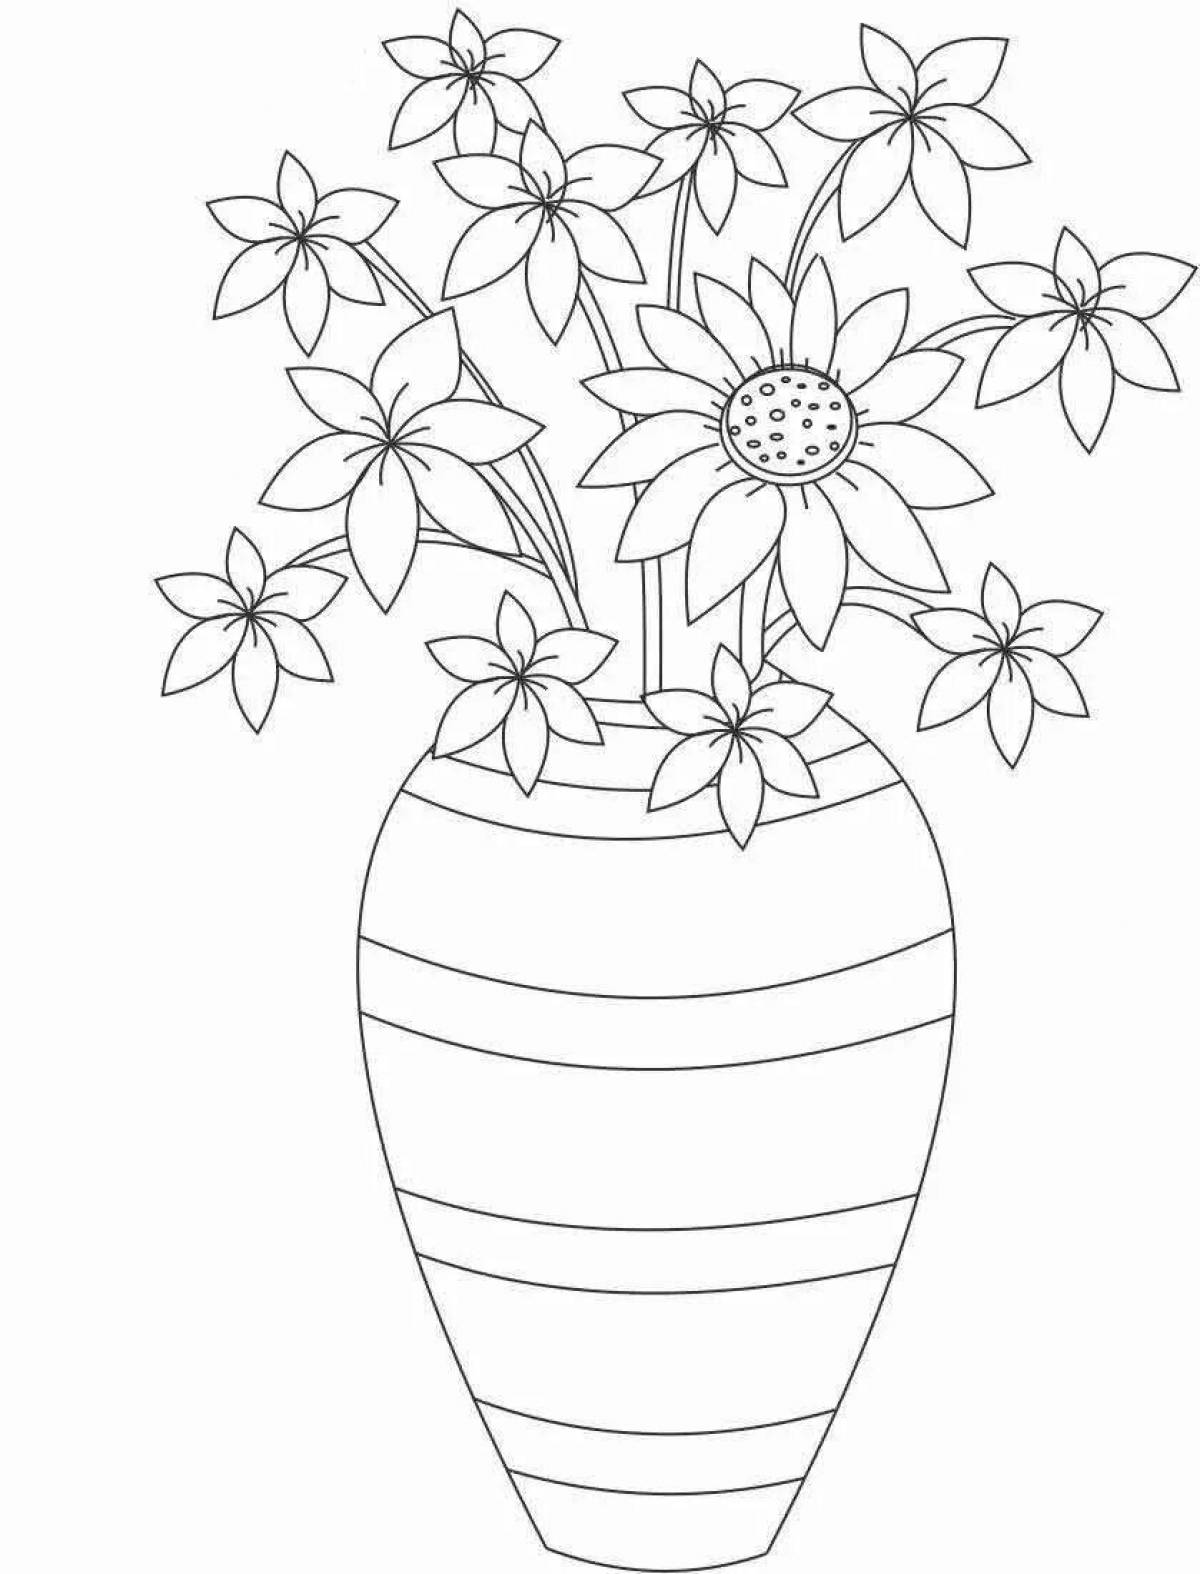 Sweet coloring flowers in a vase